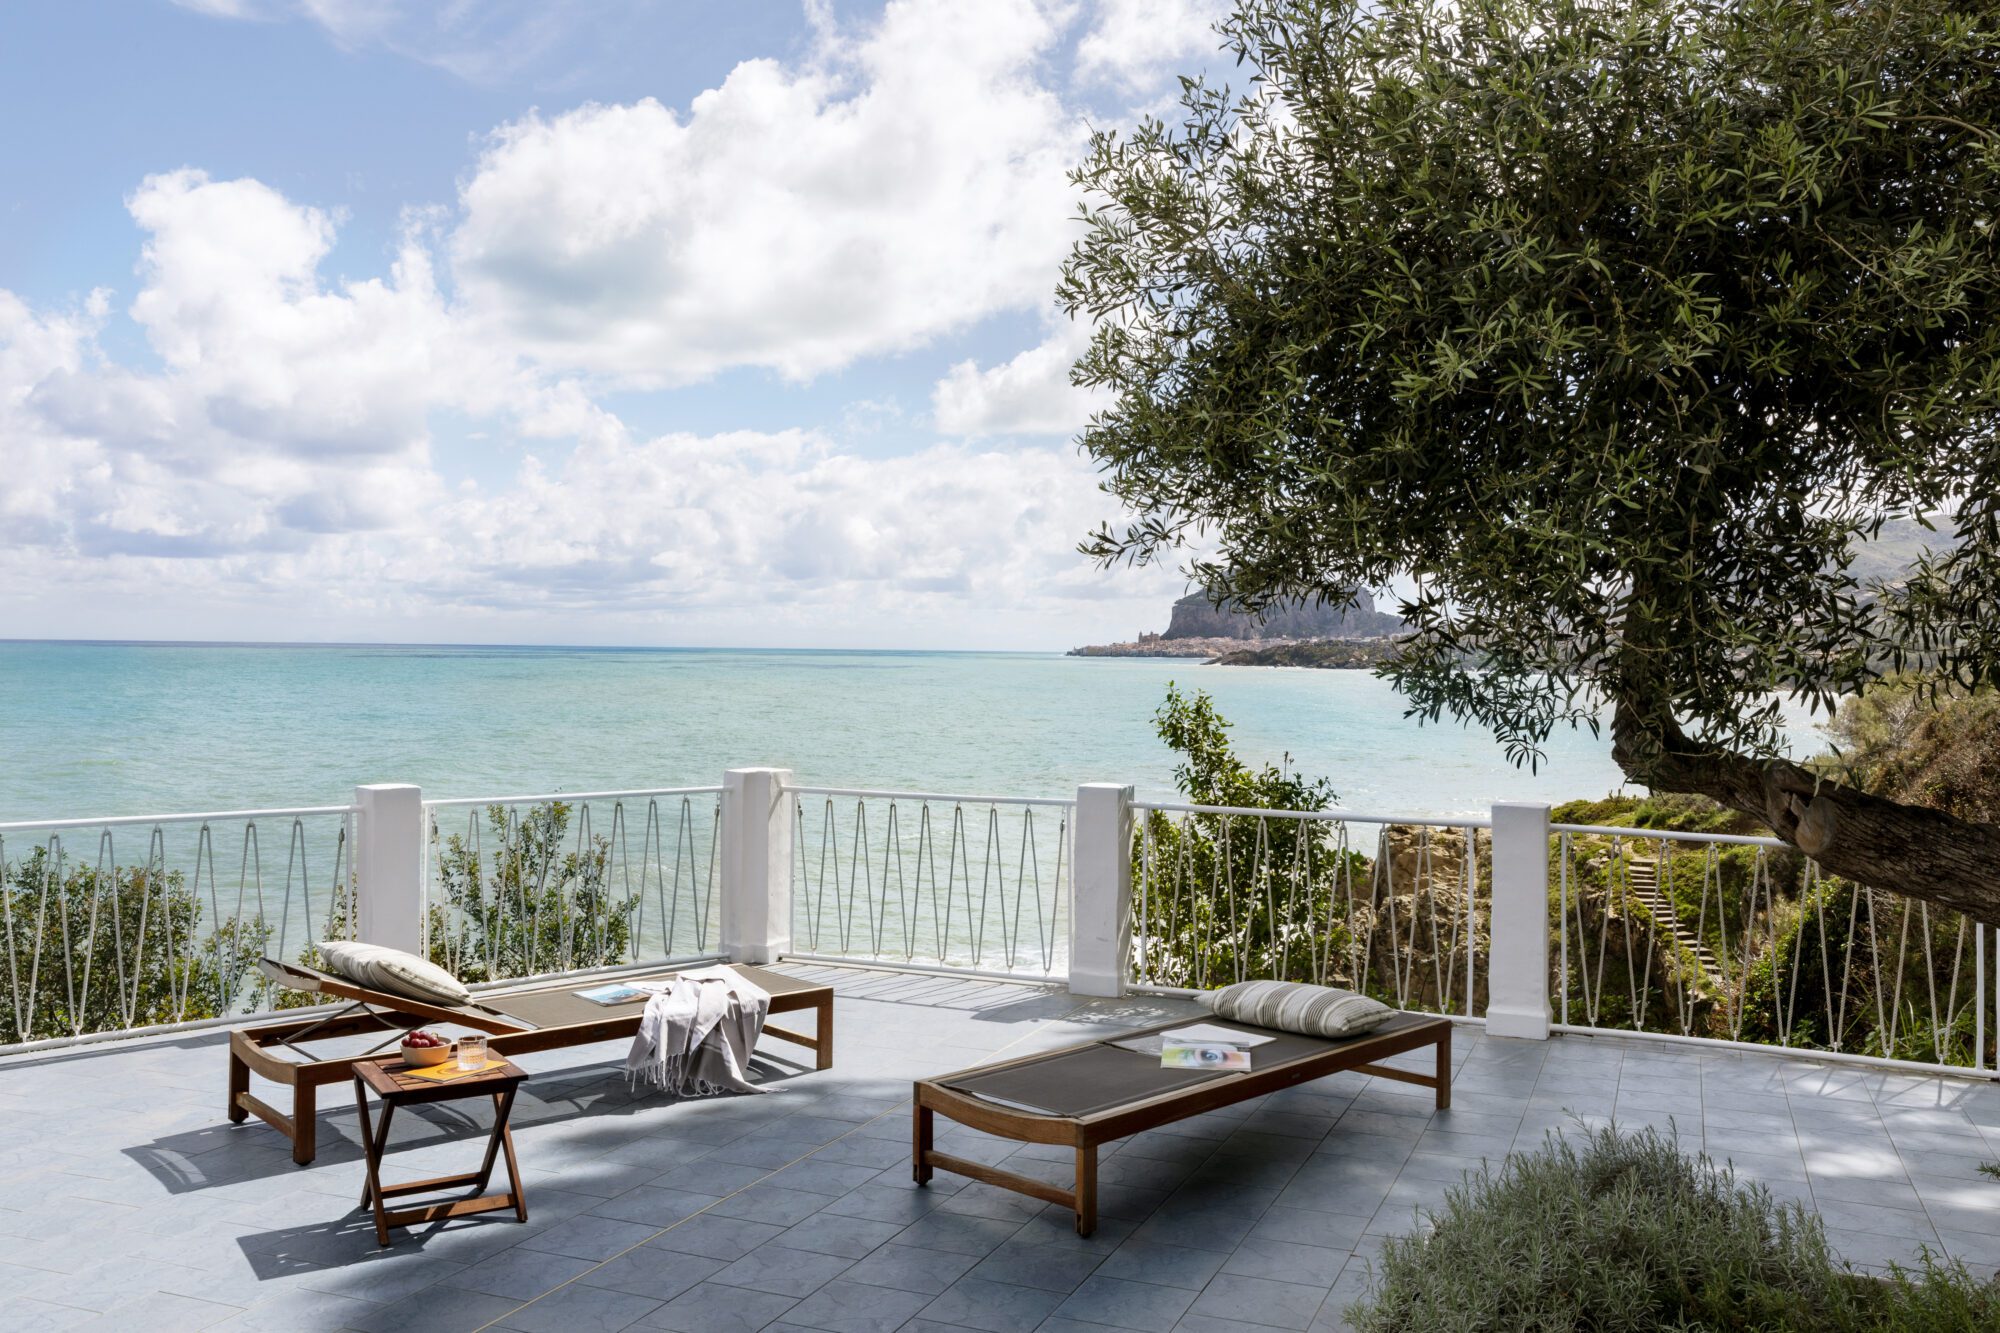 House tour: A dreamy villa overlooking the sparkling Mediterranean sea